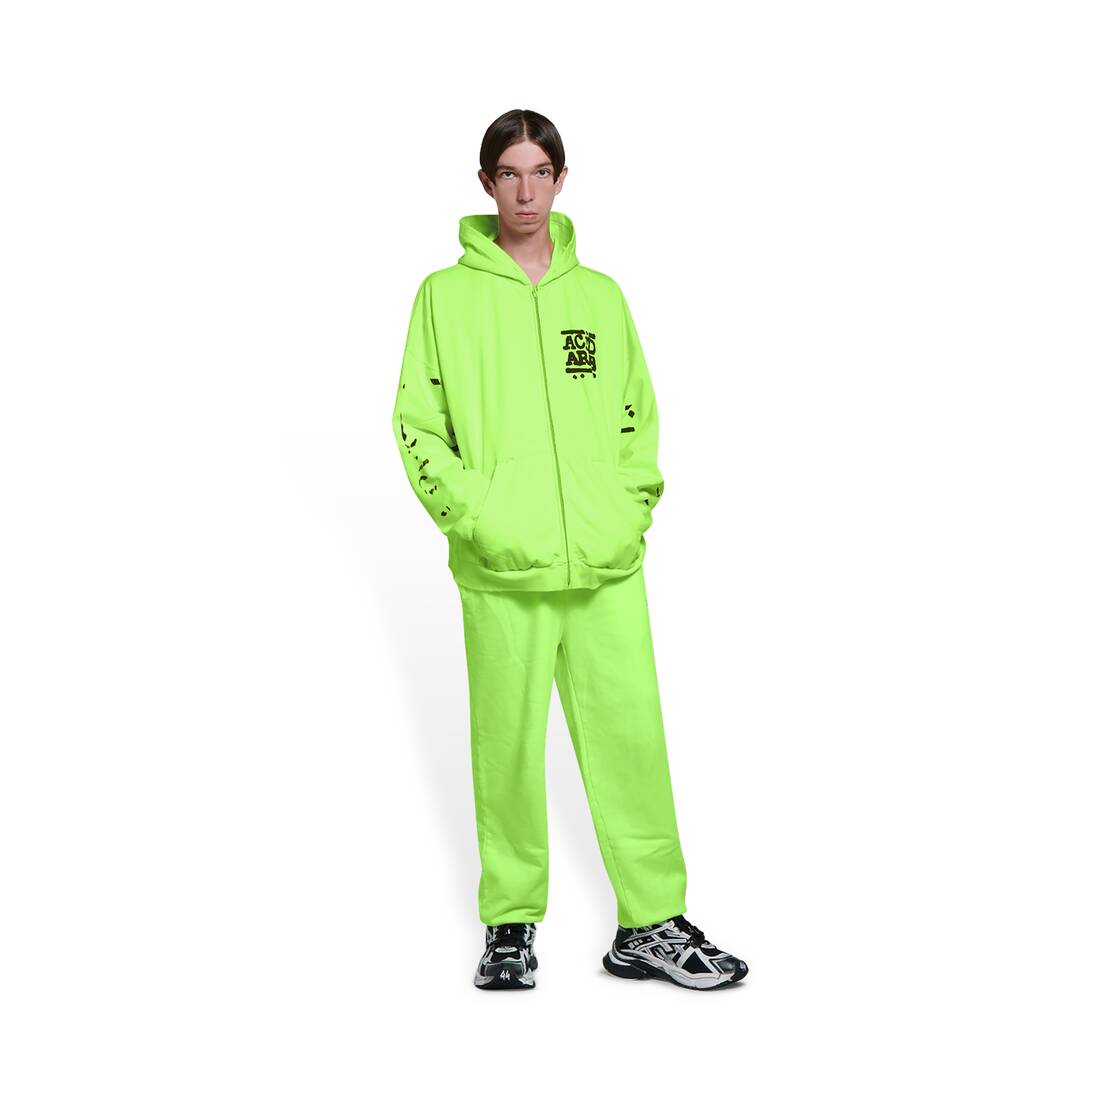 Balenciaga Music Acid Arab Merch Zip-Up Hoodie Oversized in neon green and black medium fleece